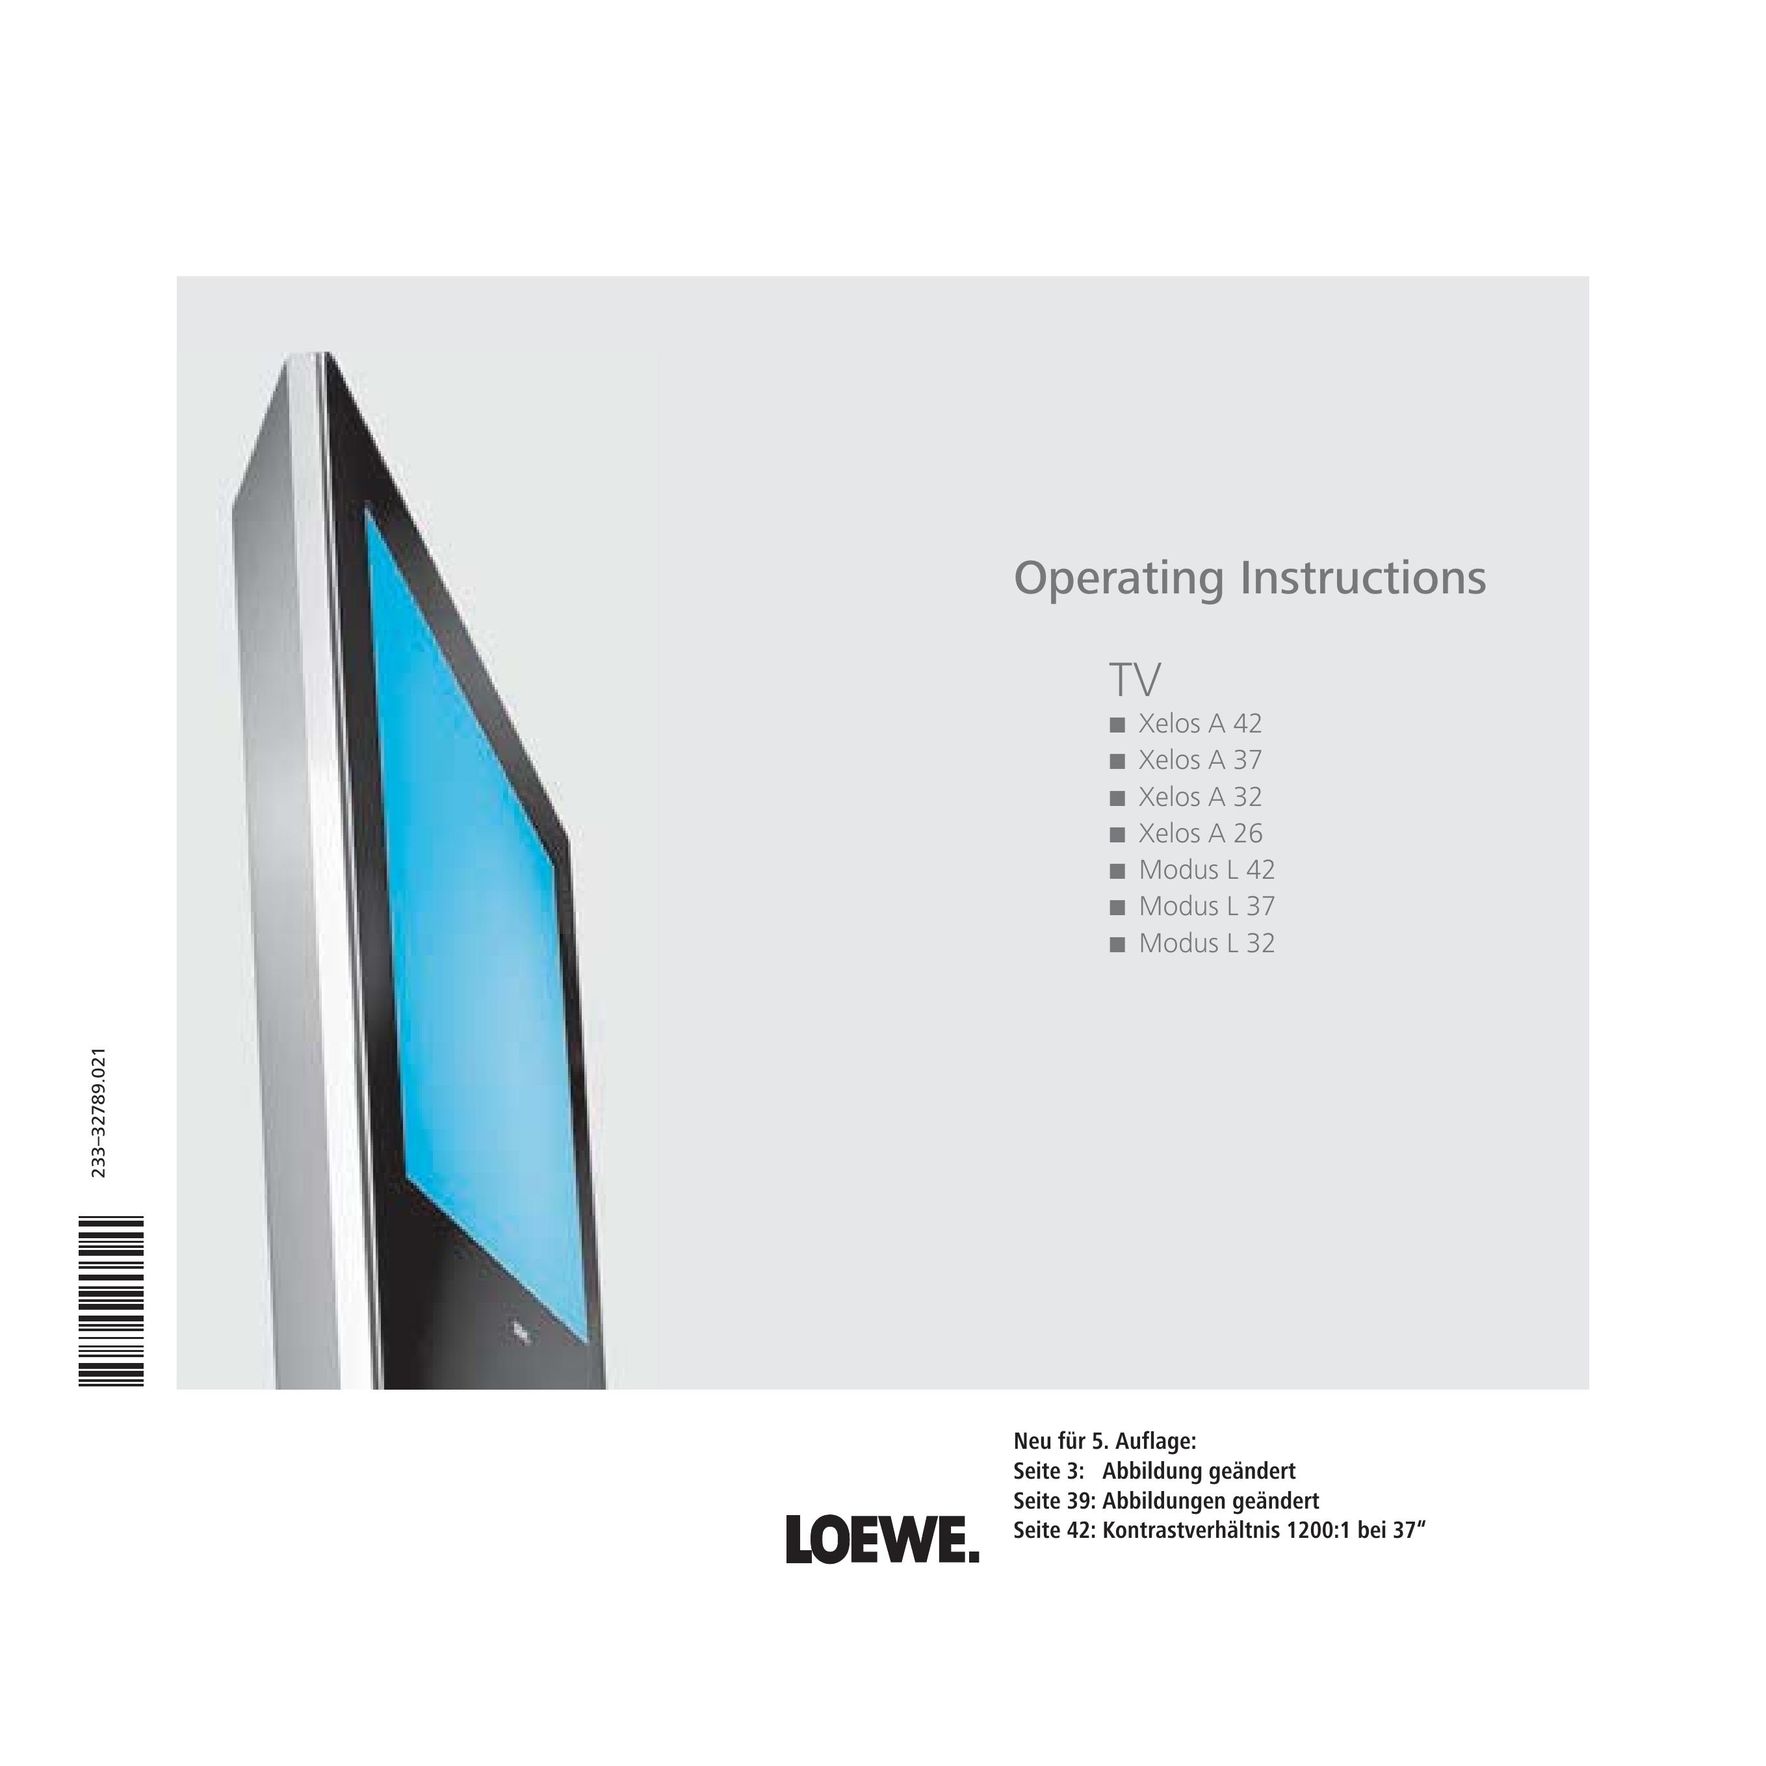 Loewe A 42 Flat Panel Television User Manual